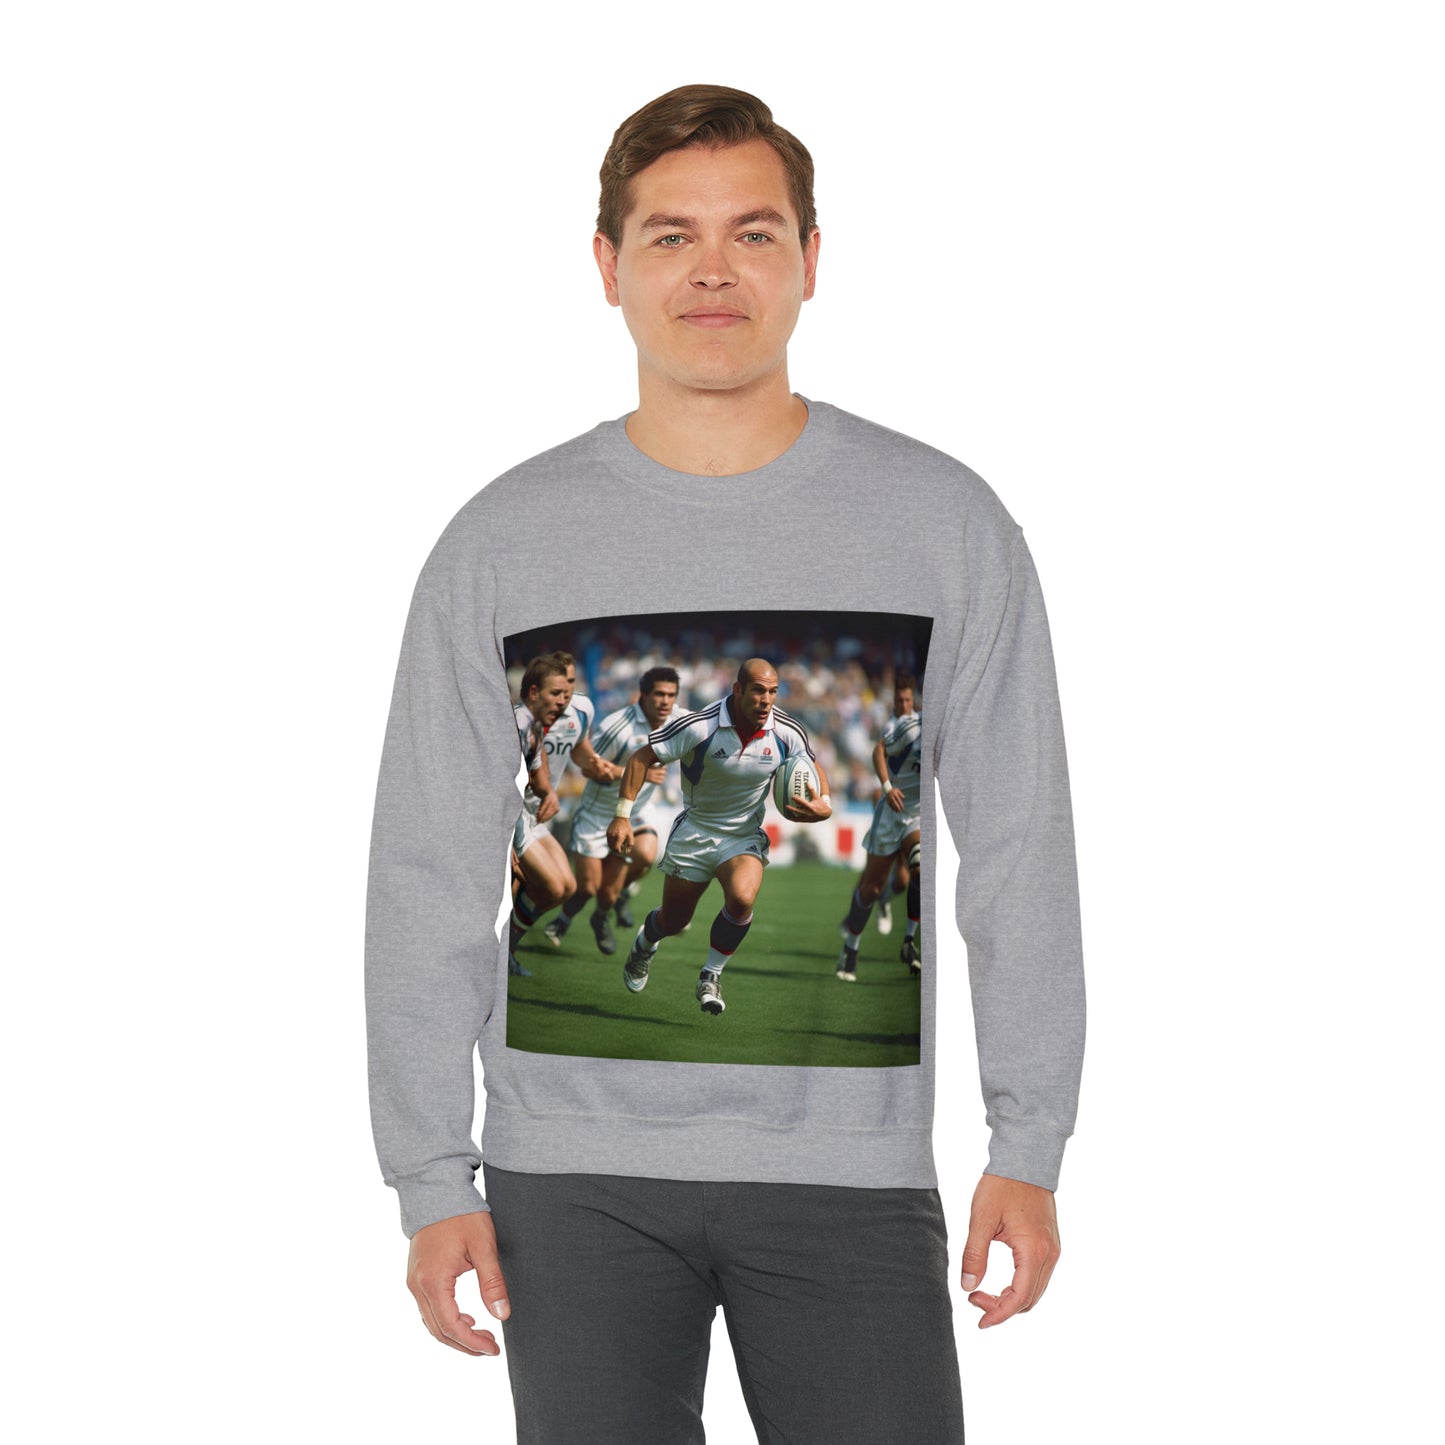 Zinedine Zidane - light sweatshirts